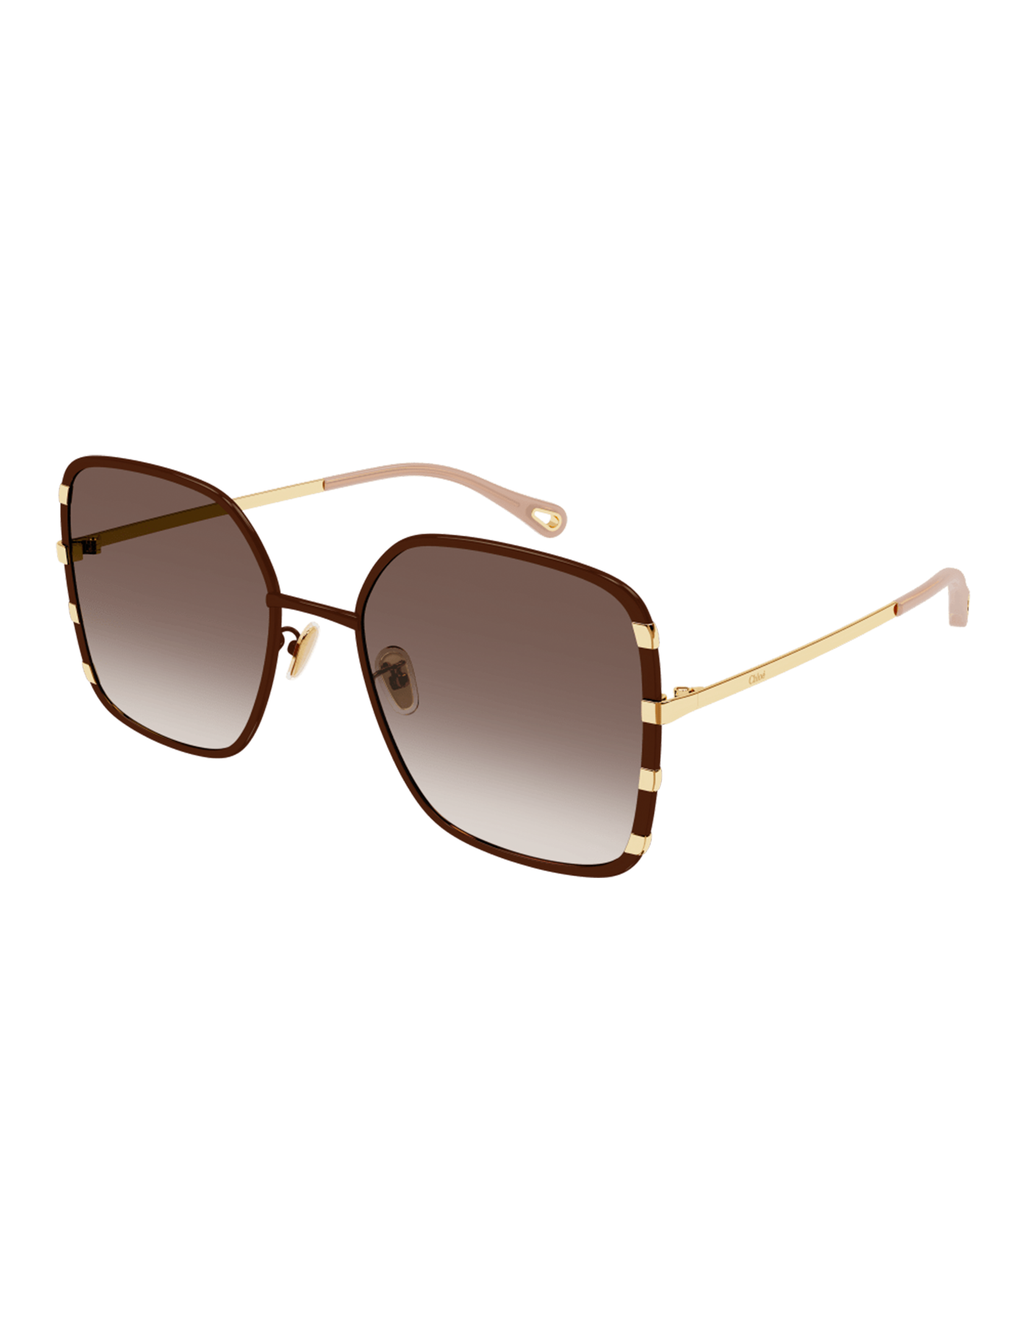 Geometric Framed Sunglasses, Brown/Gold